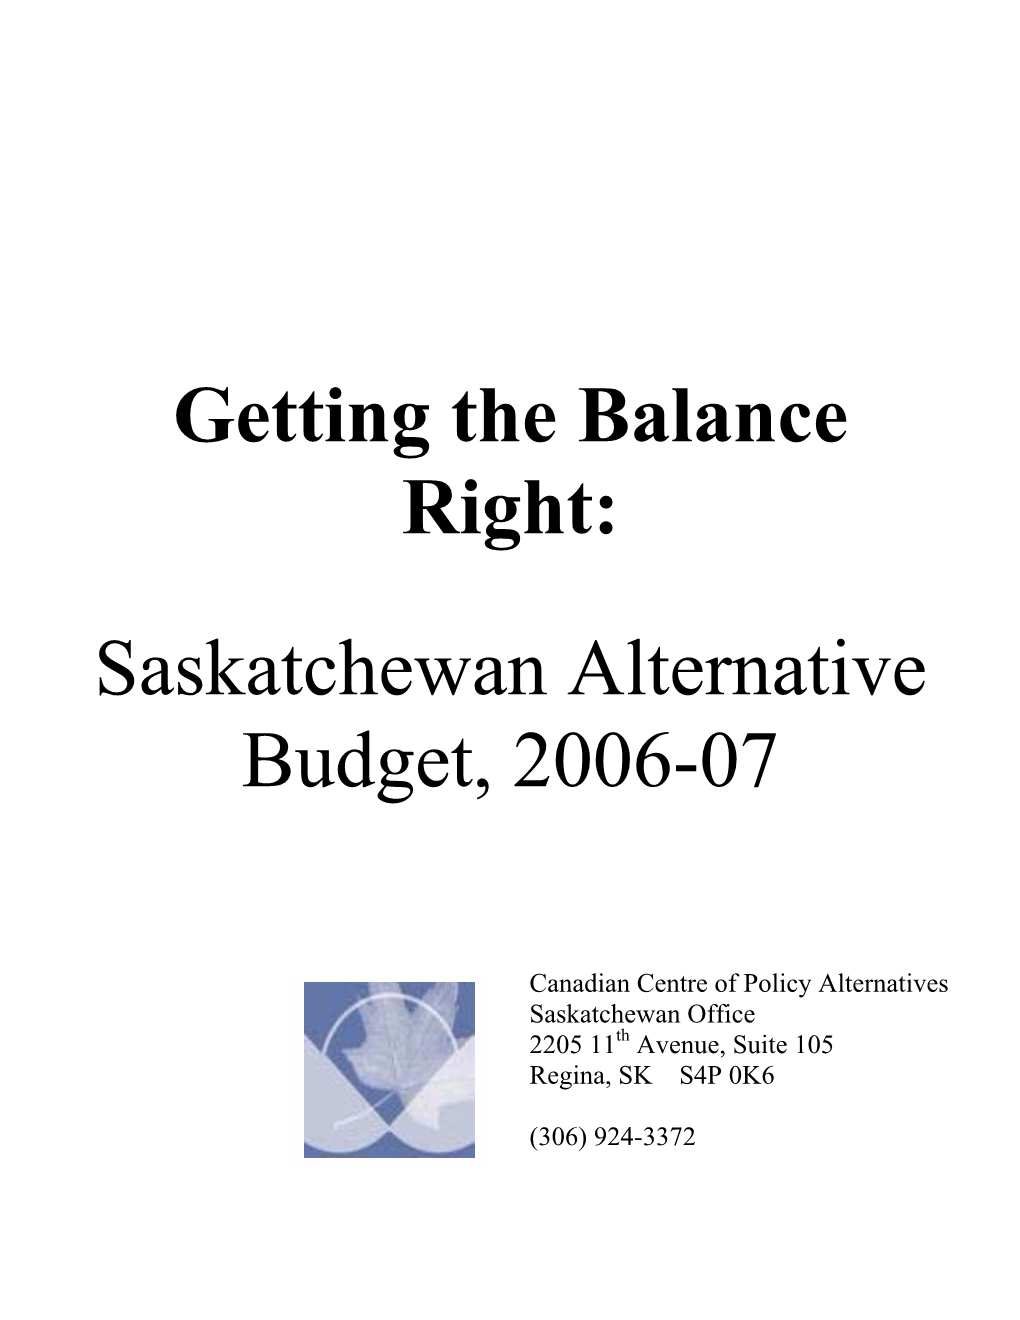 Saskatchewan Alternative Budget, 2006-07